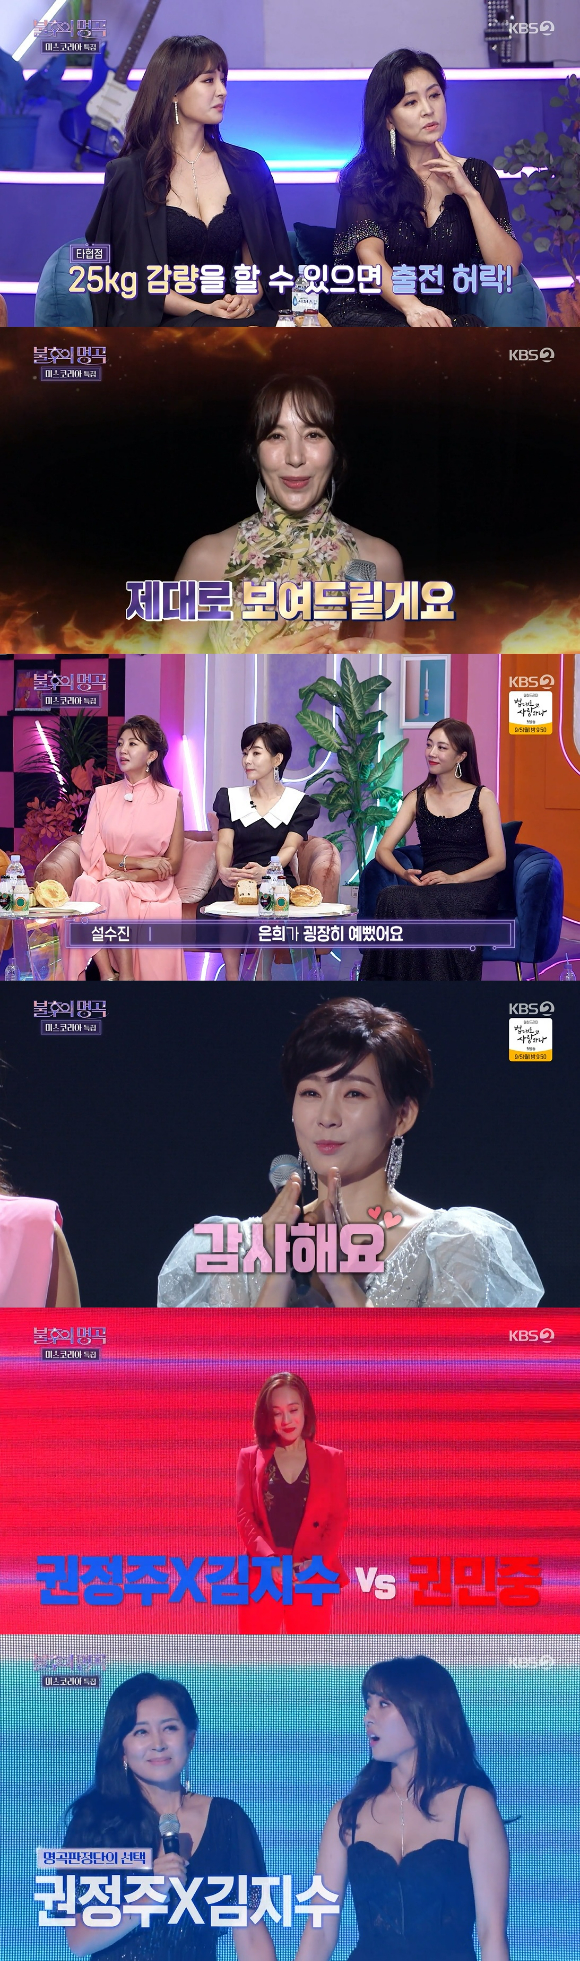 KBS 2TV '불후의 명곡' 미스코리아 편에서 권정주, 김지수 모녀가 우승했다.  [사진=KBS 2TV]